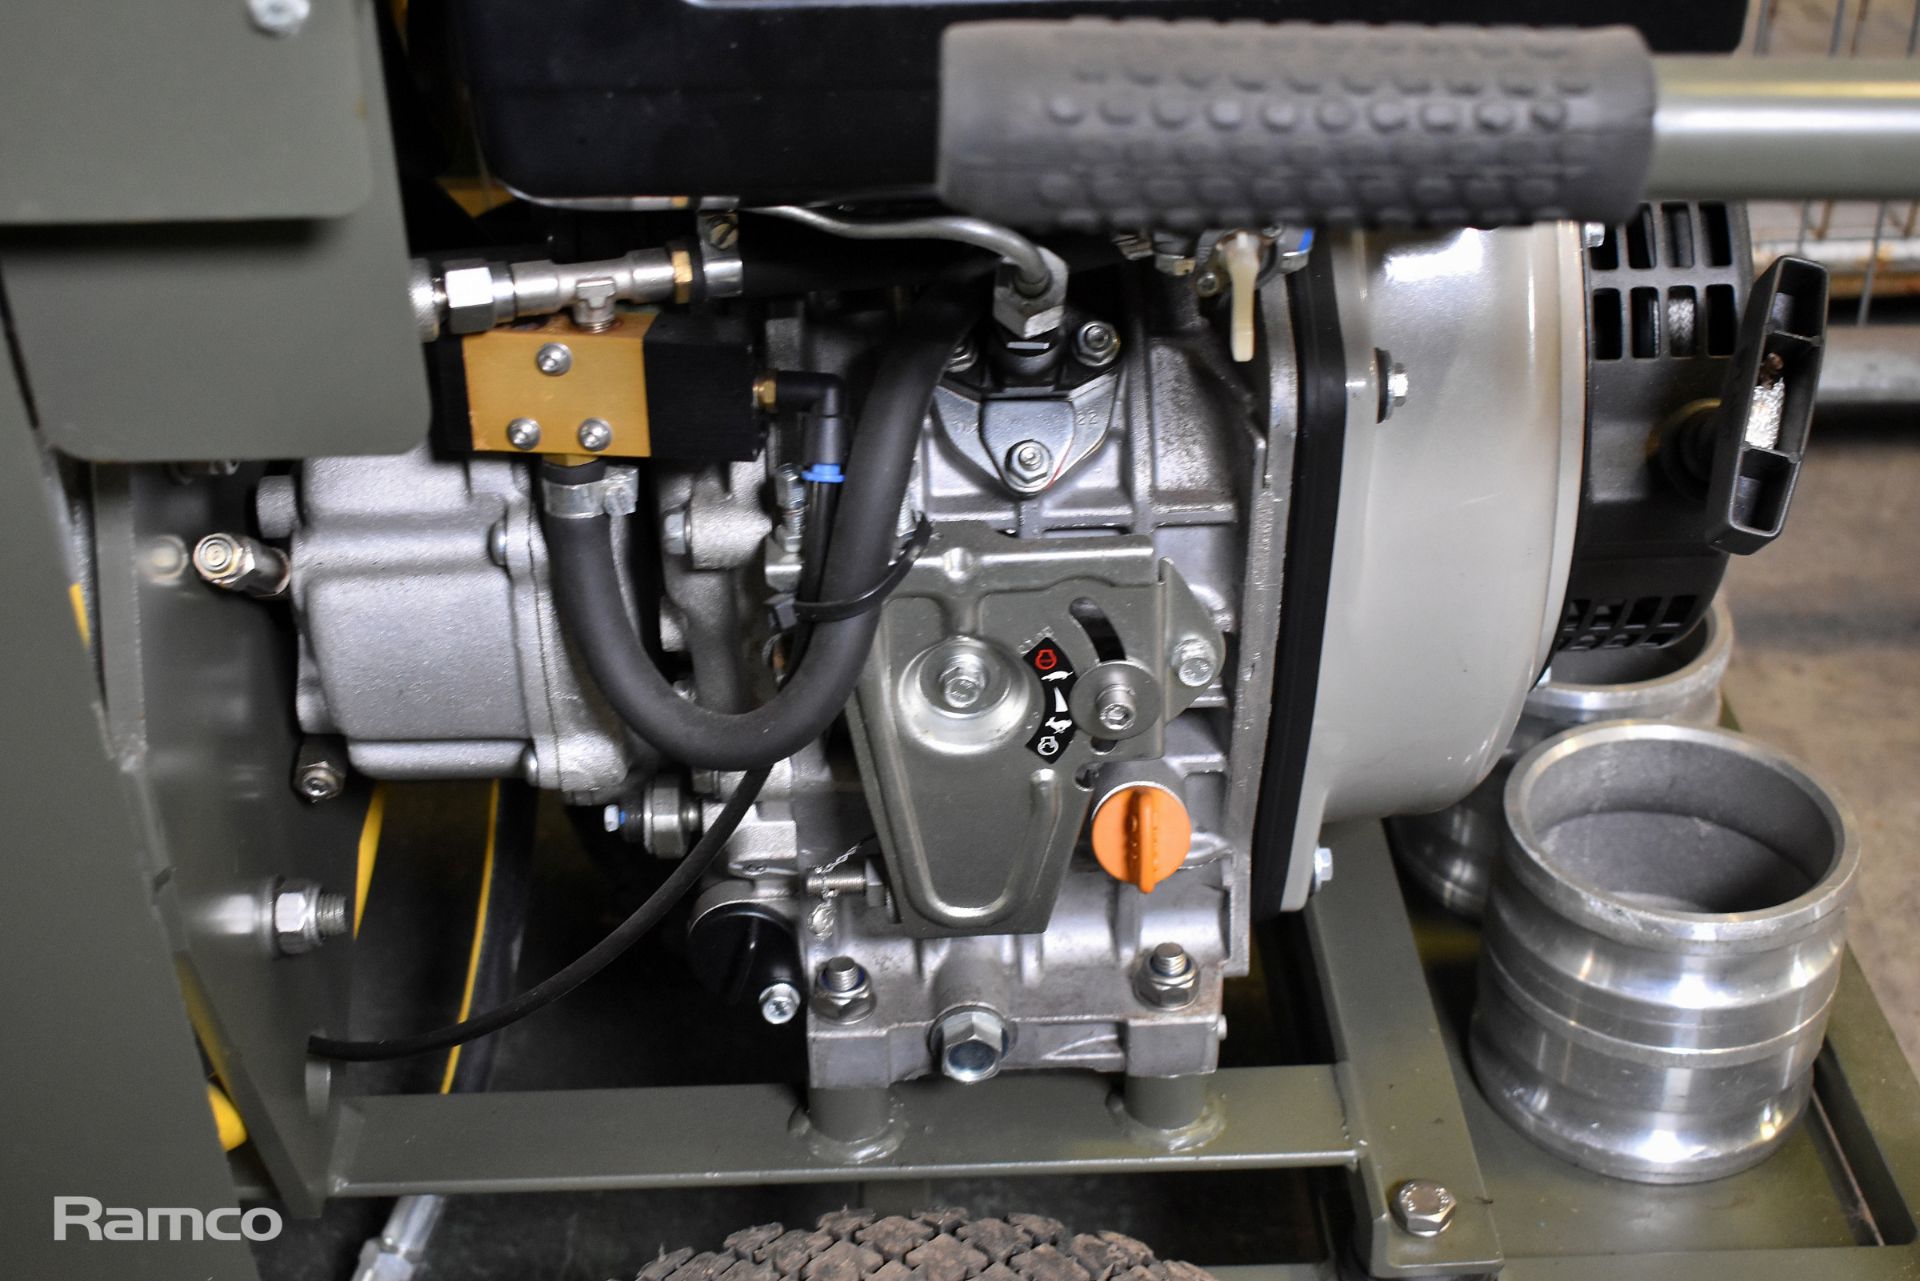 Factair Hydrovane HV04 Diesel Air Compressor - model 504C10-NSP1962 - Image 4 of 14